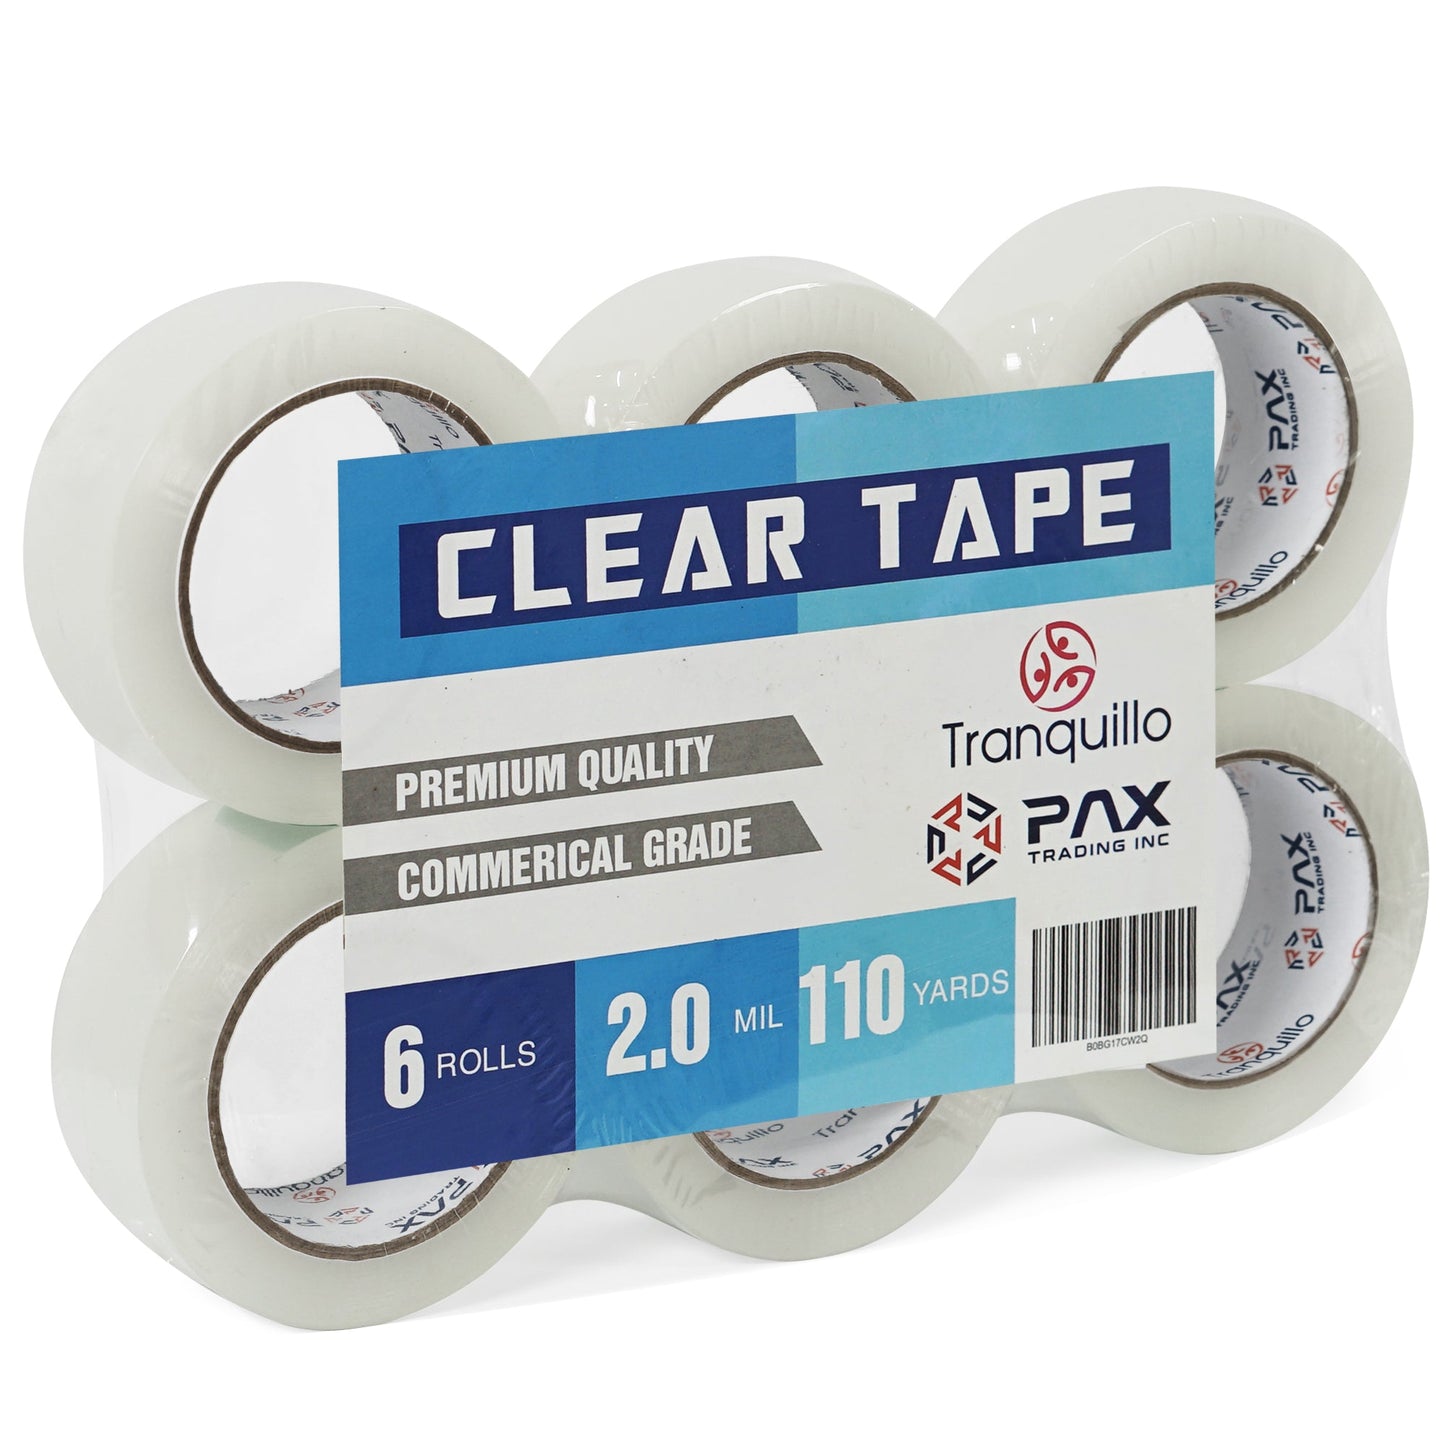 [Pack 12] Clear Tape Rolls 2" x 110 Yards x 2mil